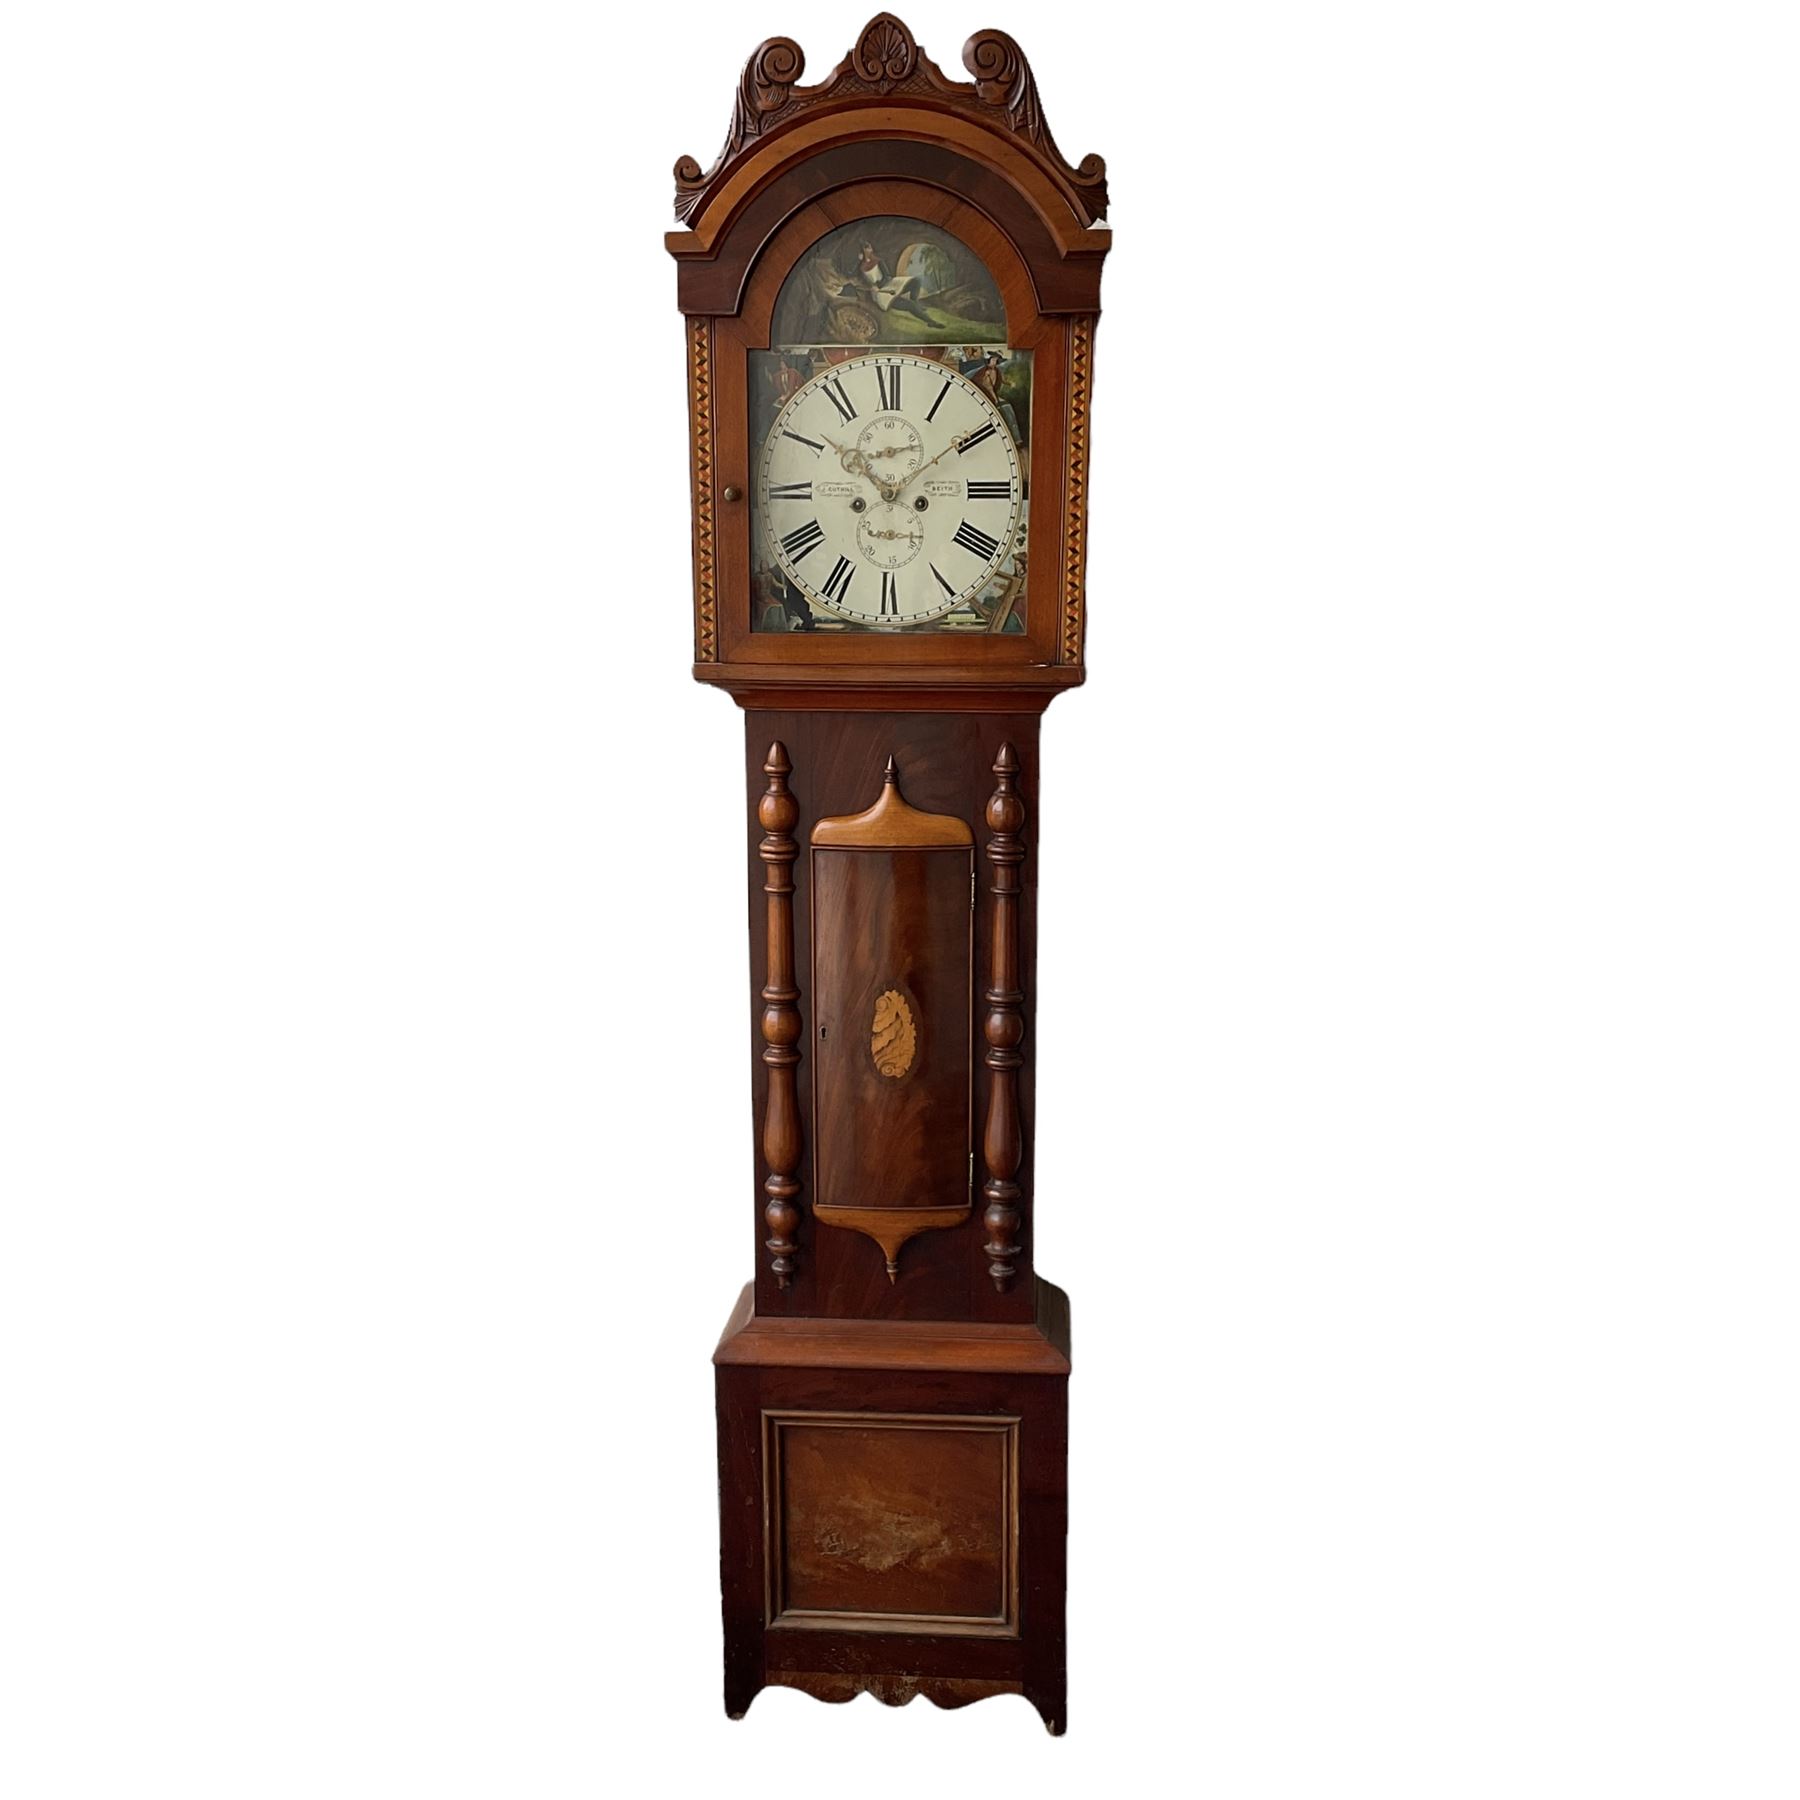 A Scottish longcase clock c 1890 in a contrasting light and dark mahogany veneered case